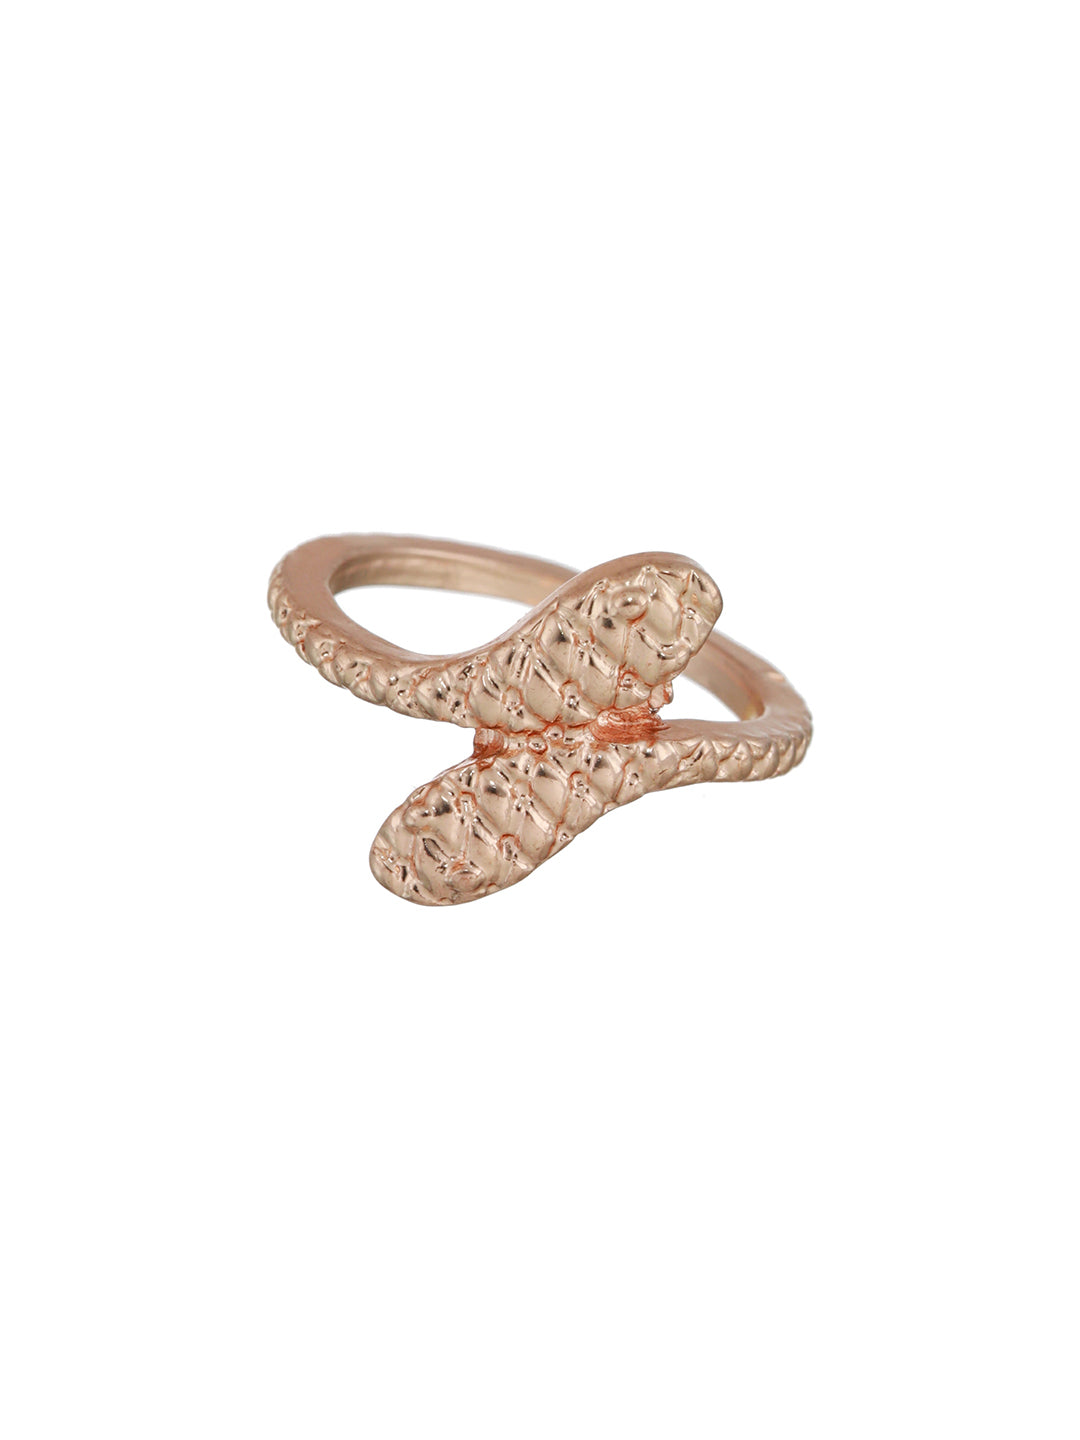 Leaf Design Textured Rose Gold-Plated Ring